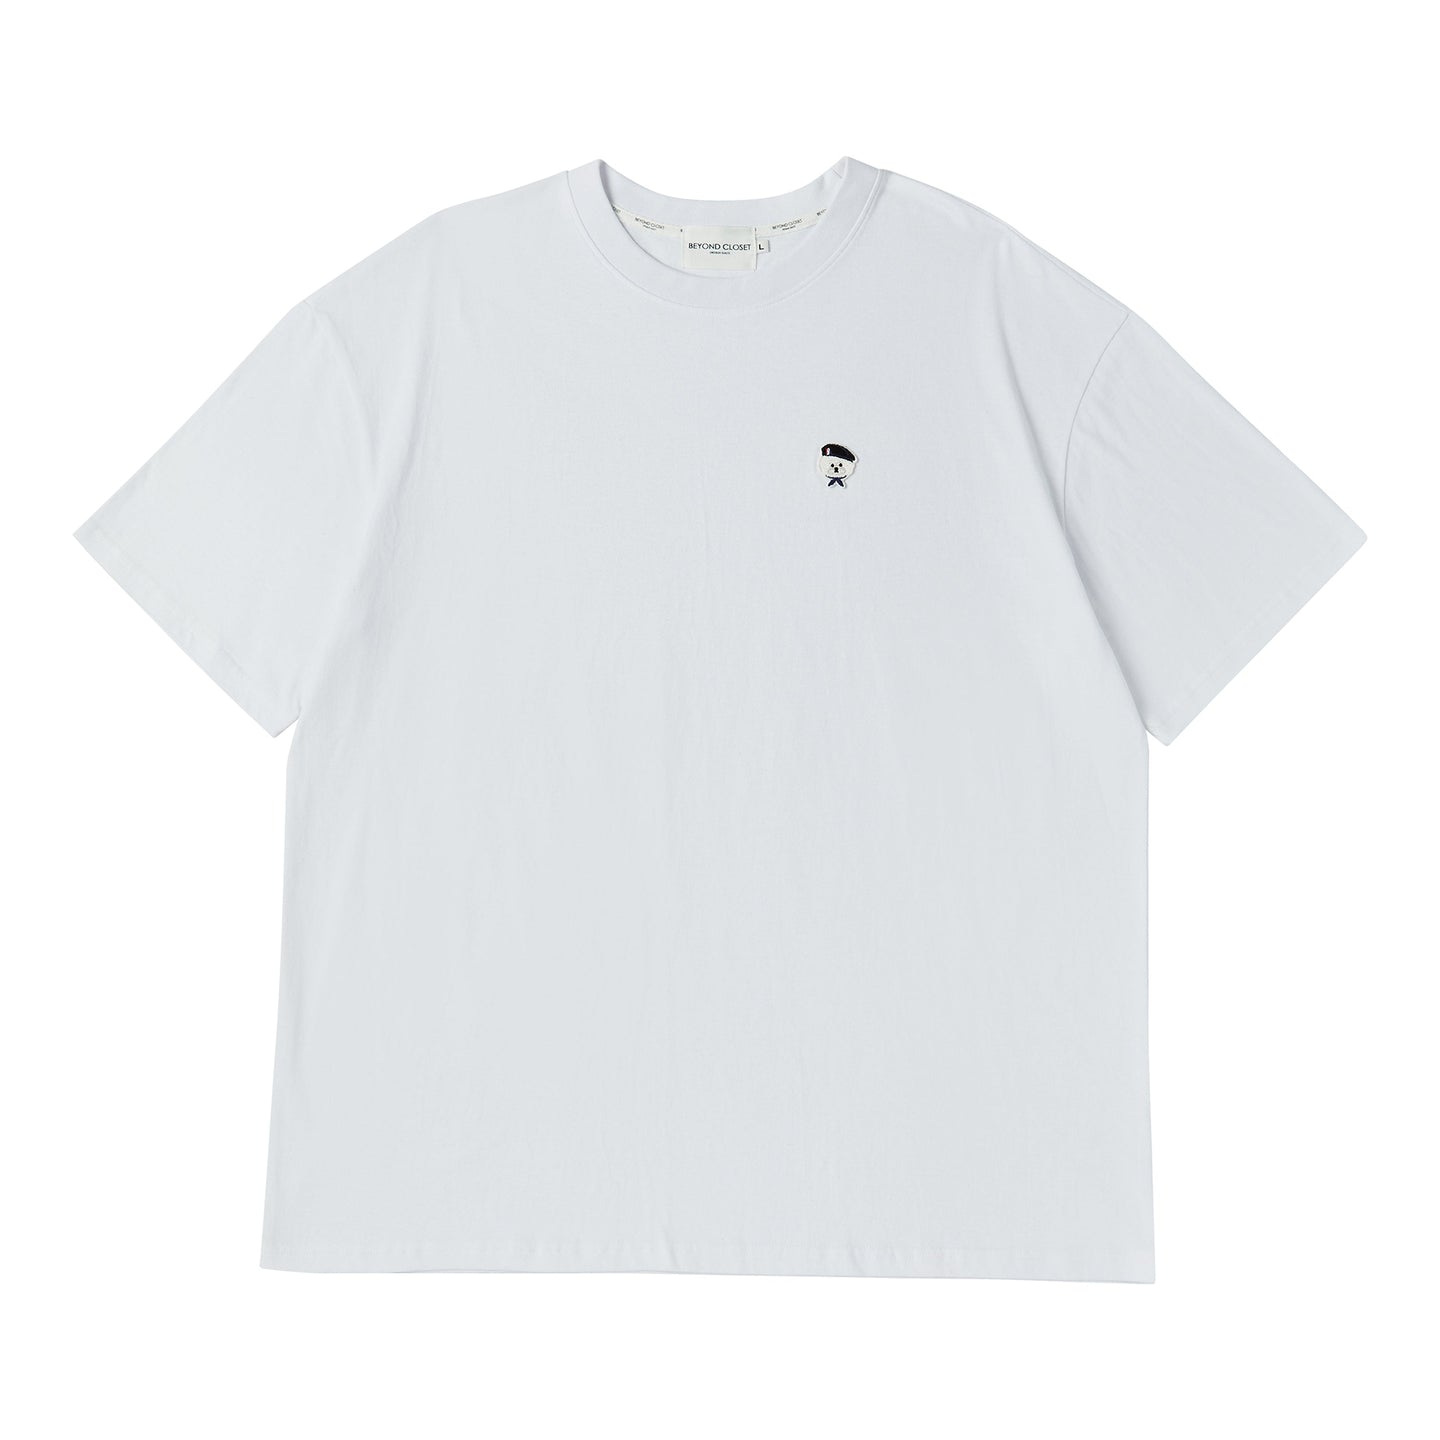 BEYOND CLOSET New ParisianT-Shirt White